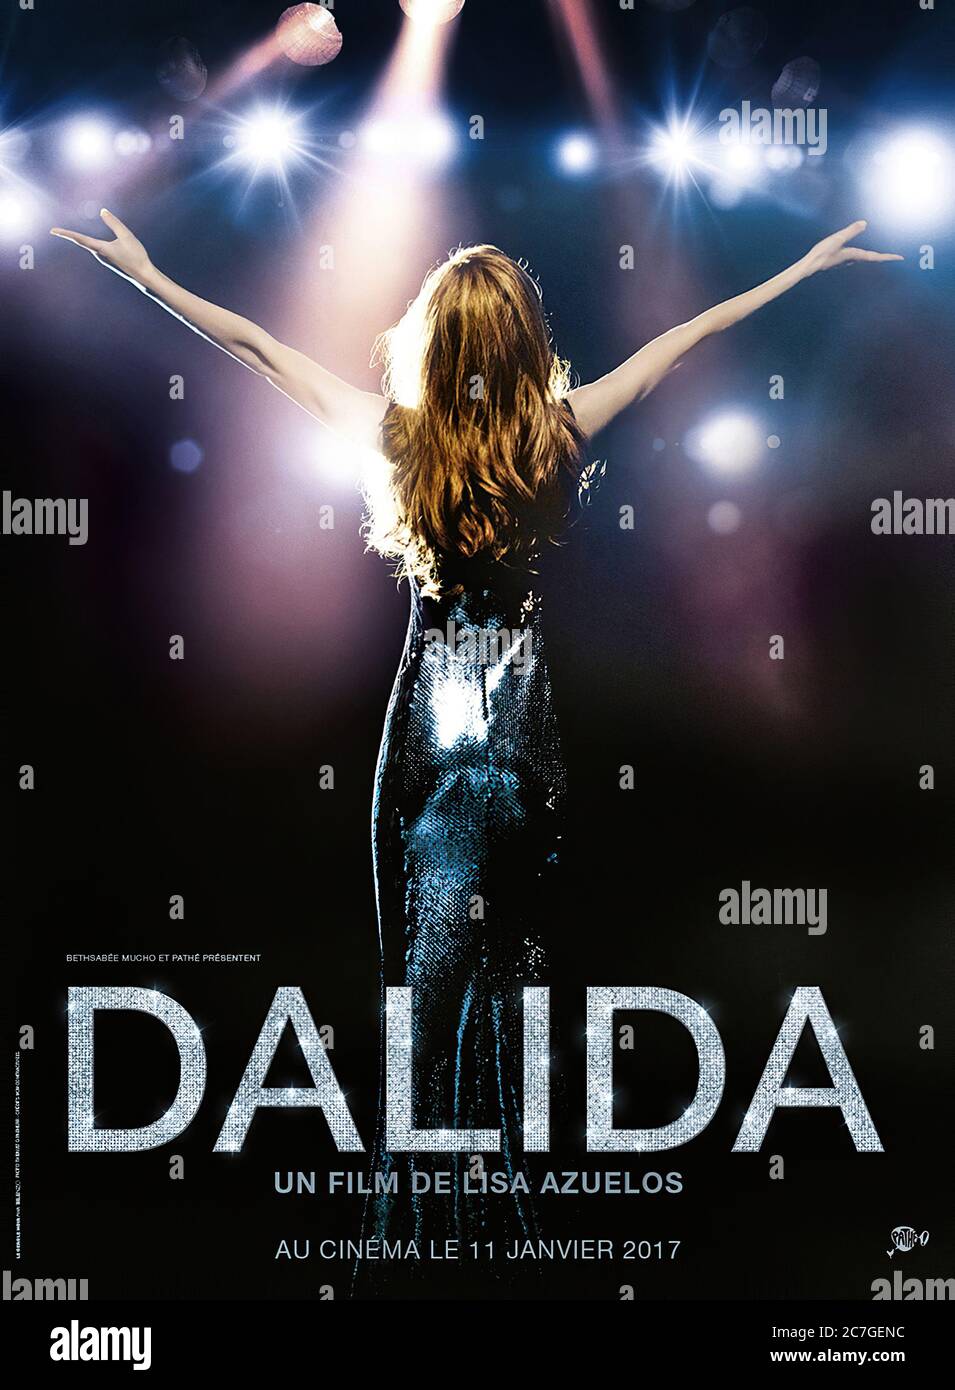 Dalida - Movie Poster Stock Photo